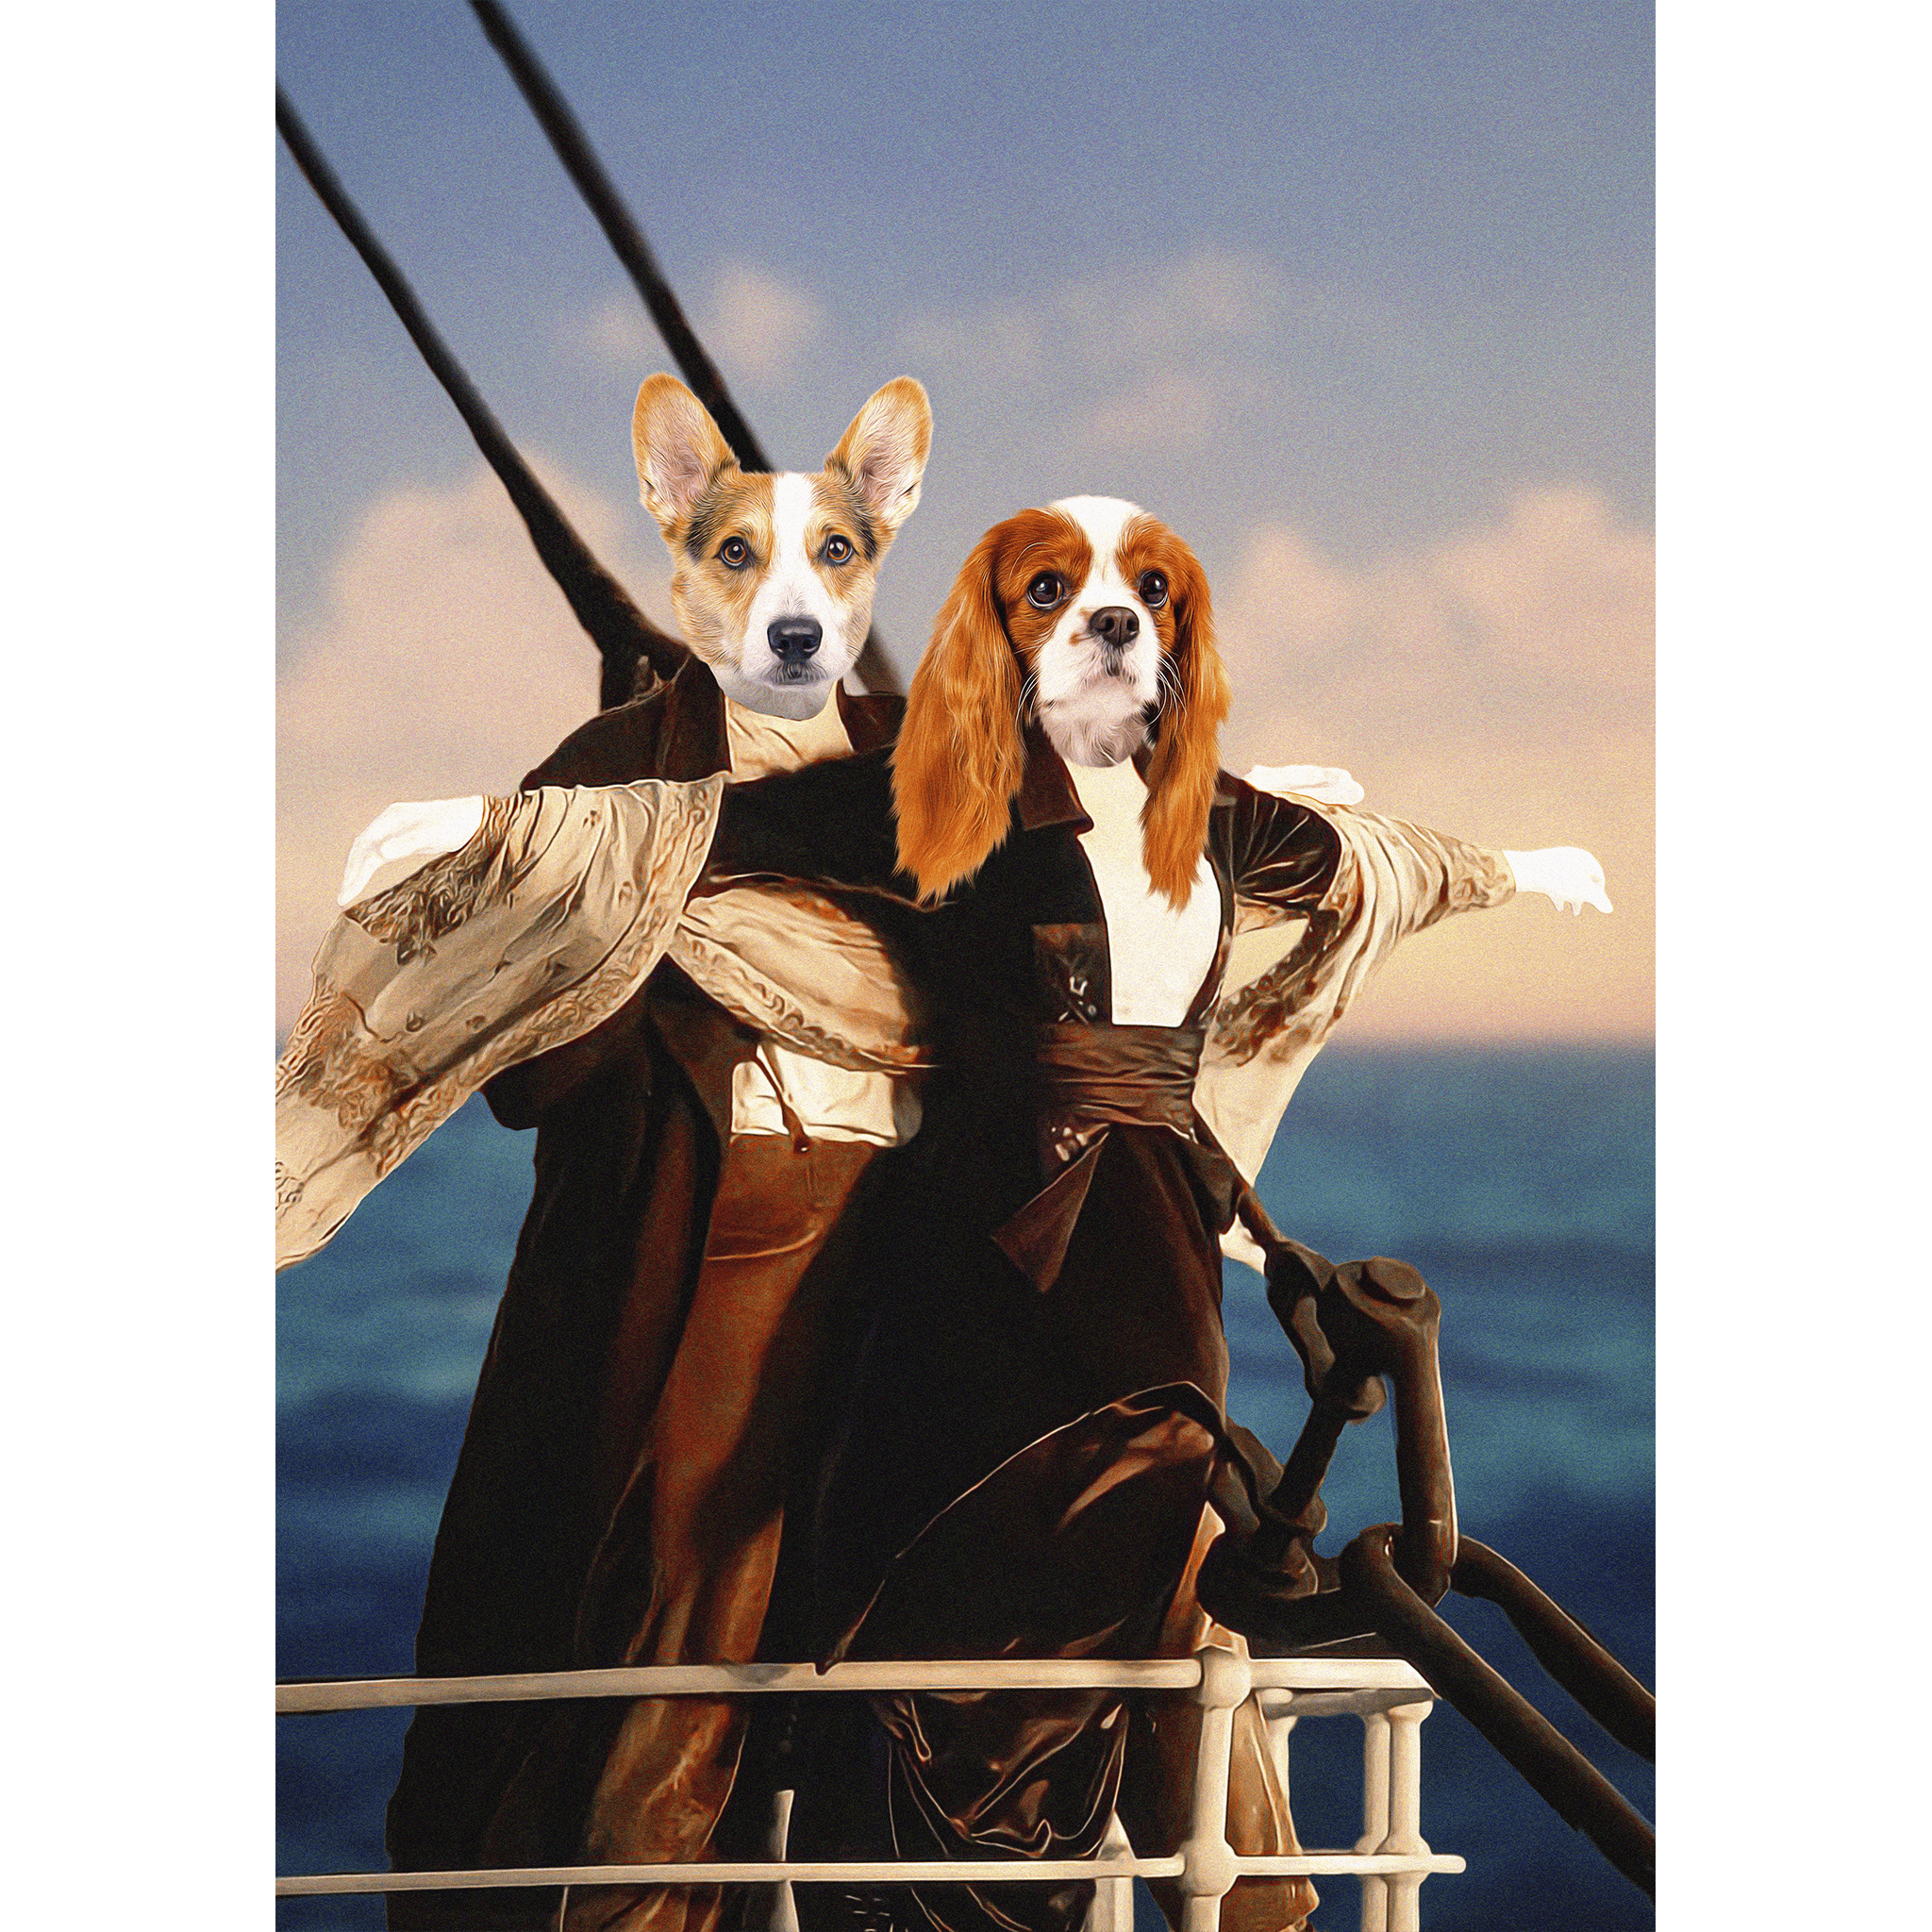 'Titanic Doggos' 2 Pet Digital Portrait